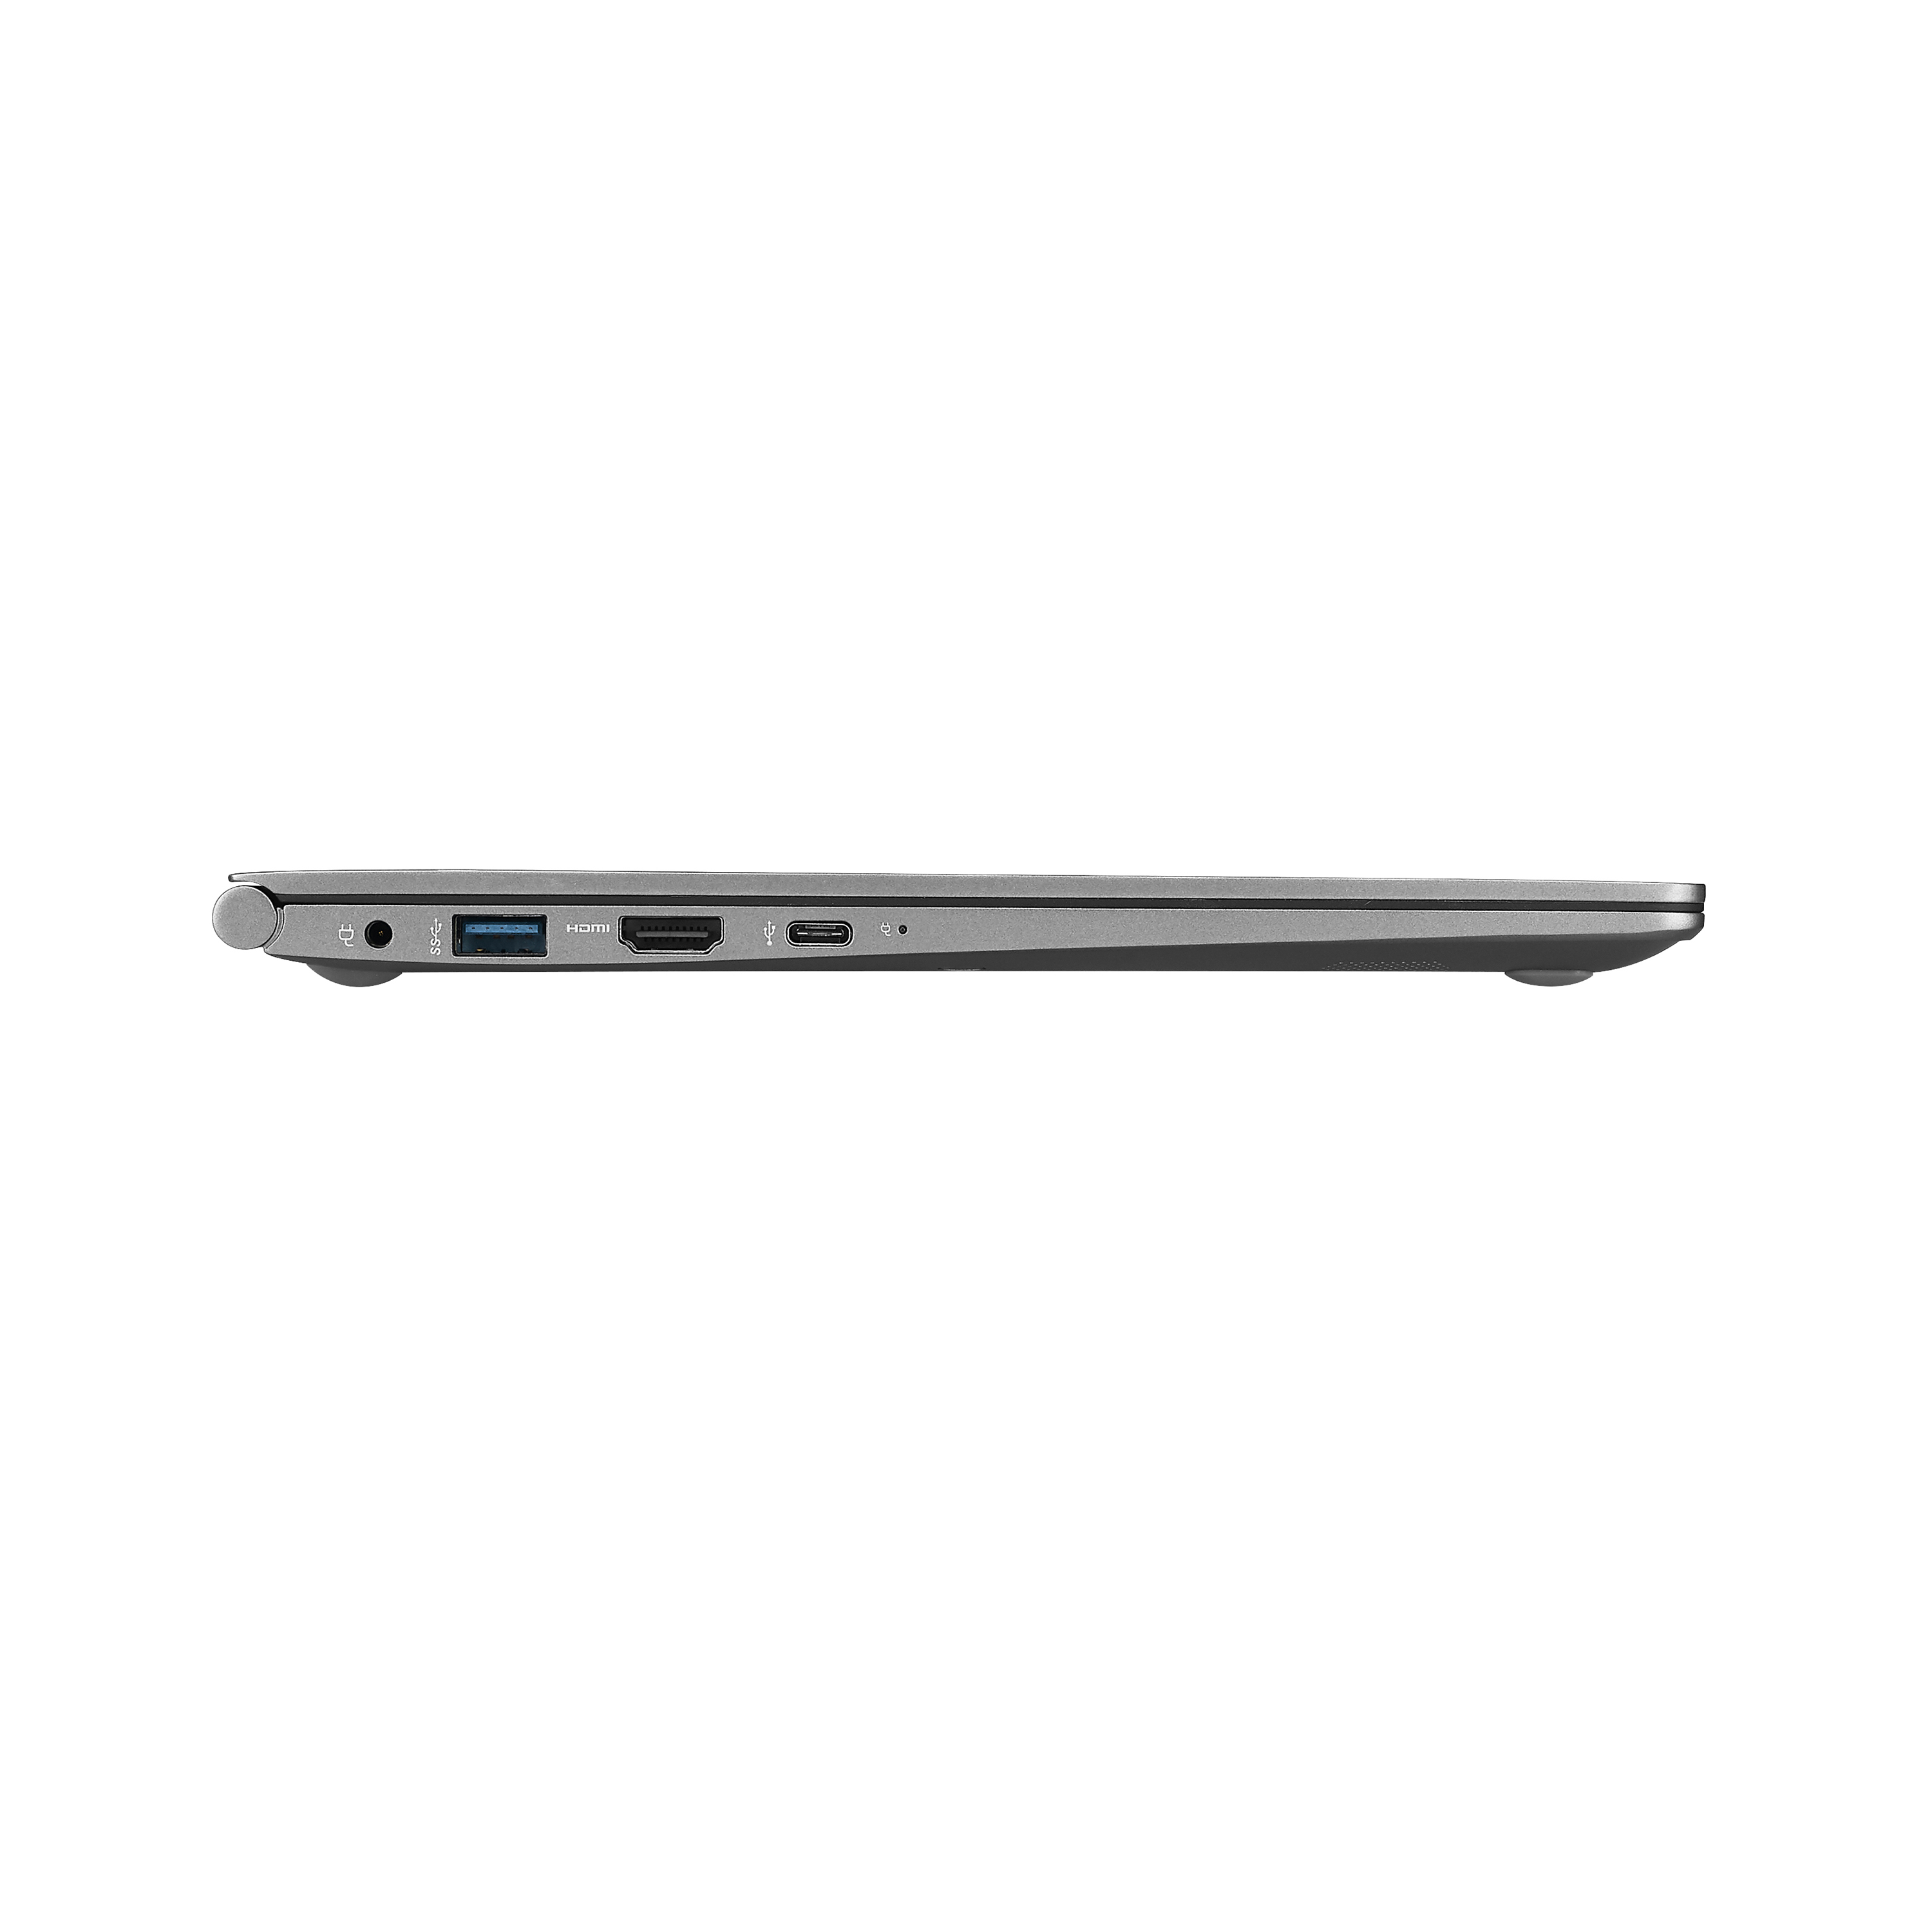 LG gram 13 FHD Touch, i5-8265U, 8GB RAM, 256GB SSD, Ultra-Slim Touch Laptop - 13Z990-A.AAS6U1 - image 2 of 10